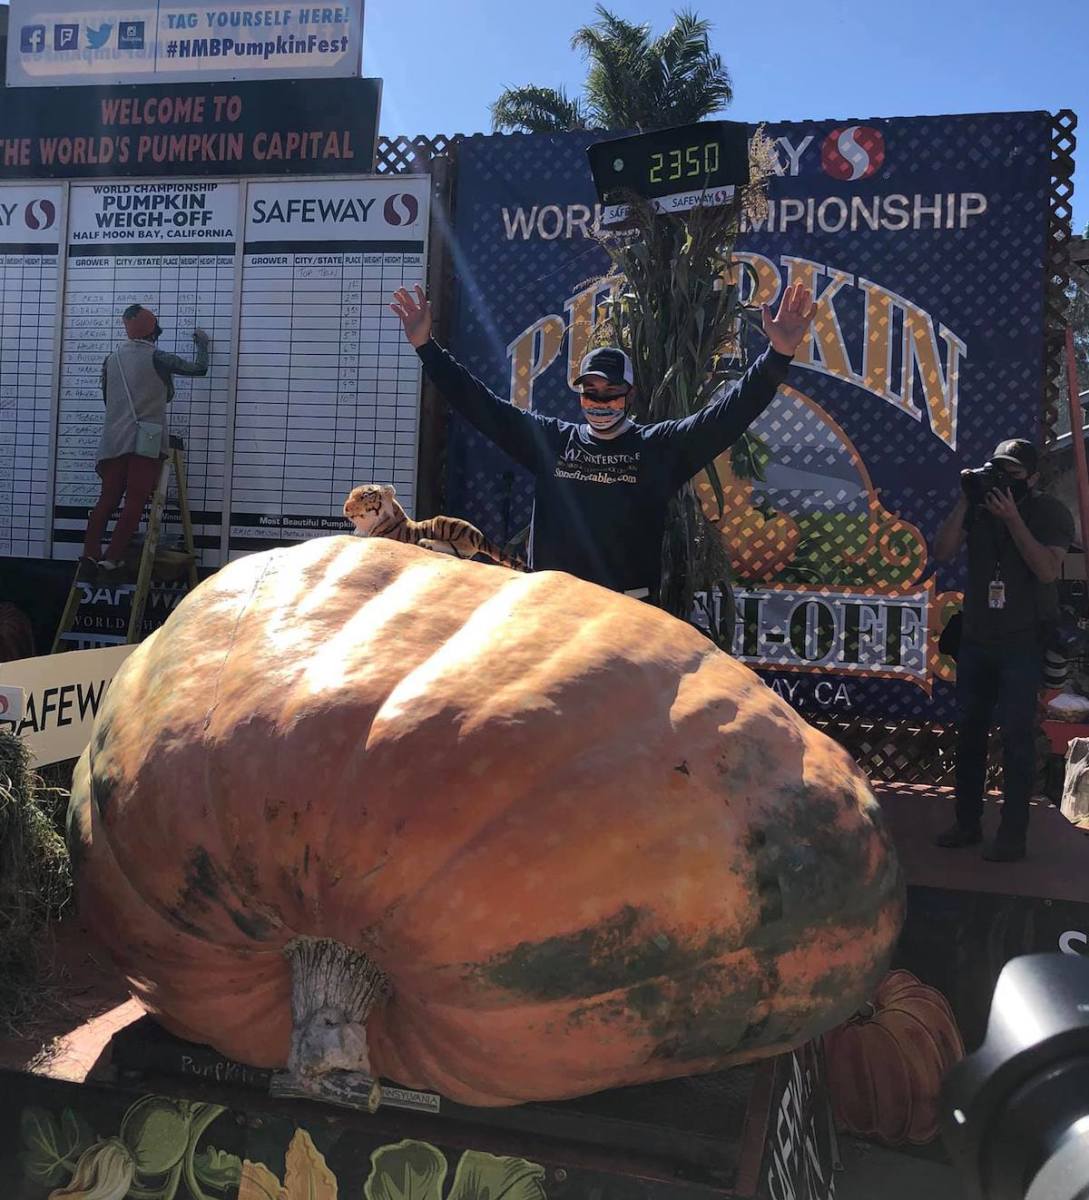 Travis Gienger grew a pumpkin that weighs more than 2,000 pounds.